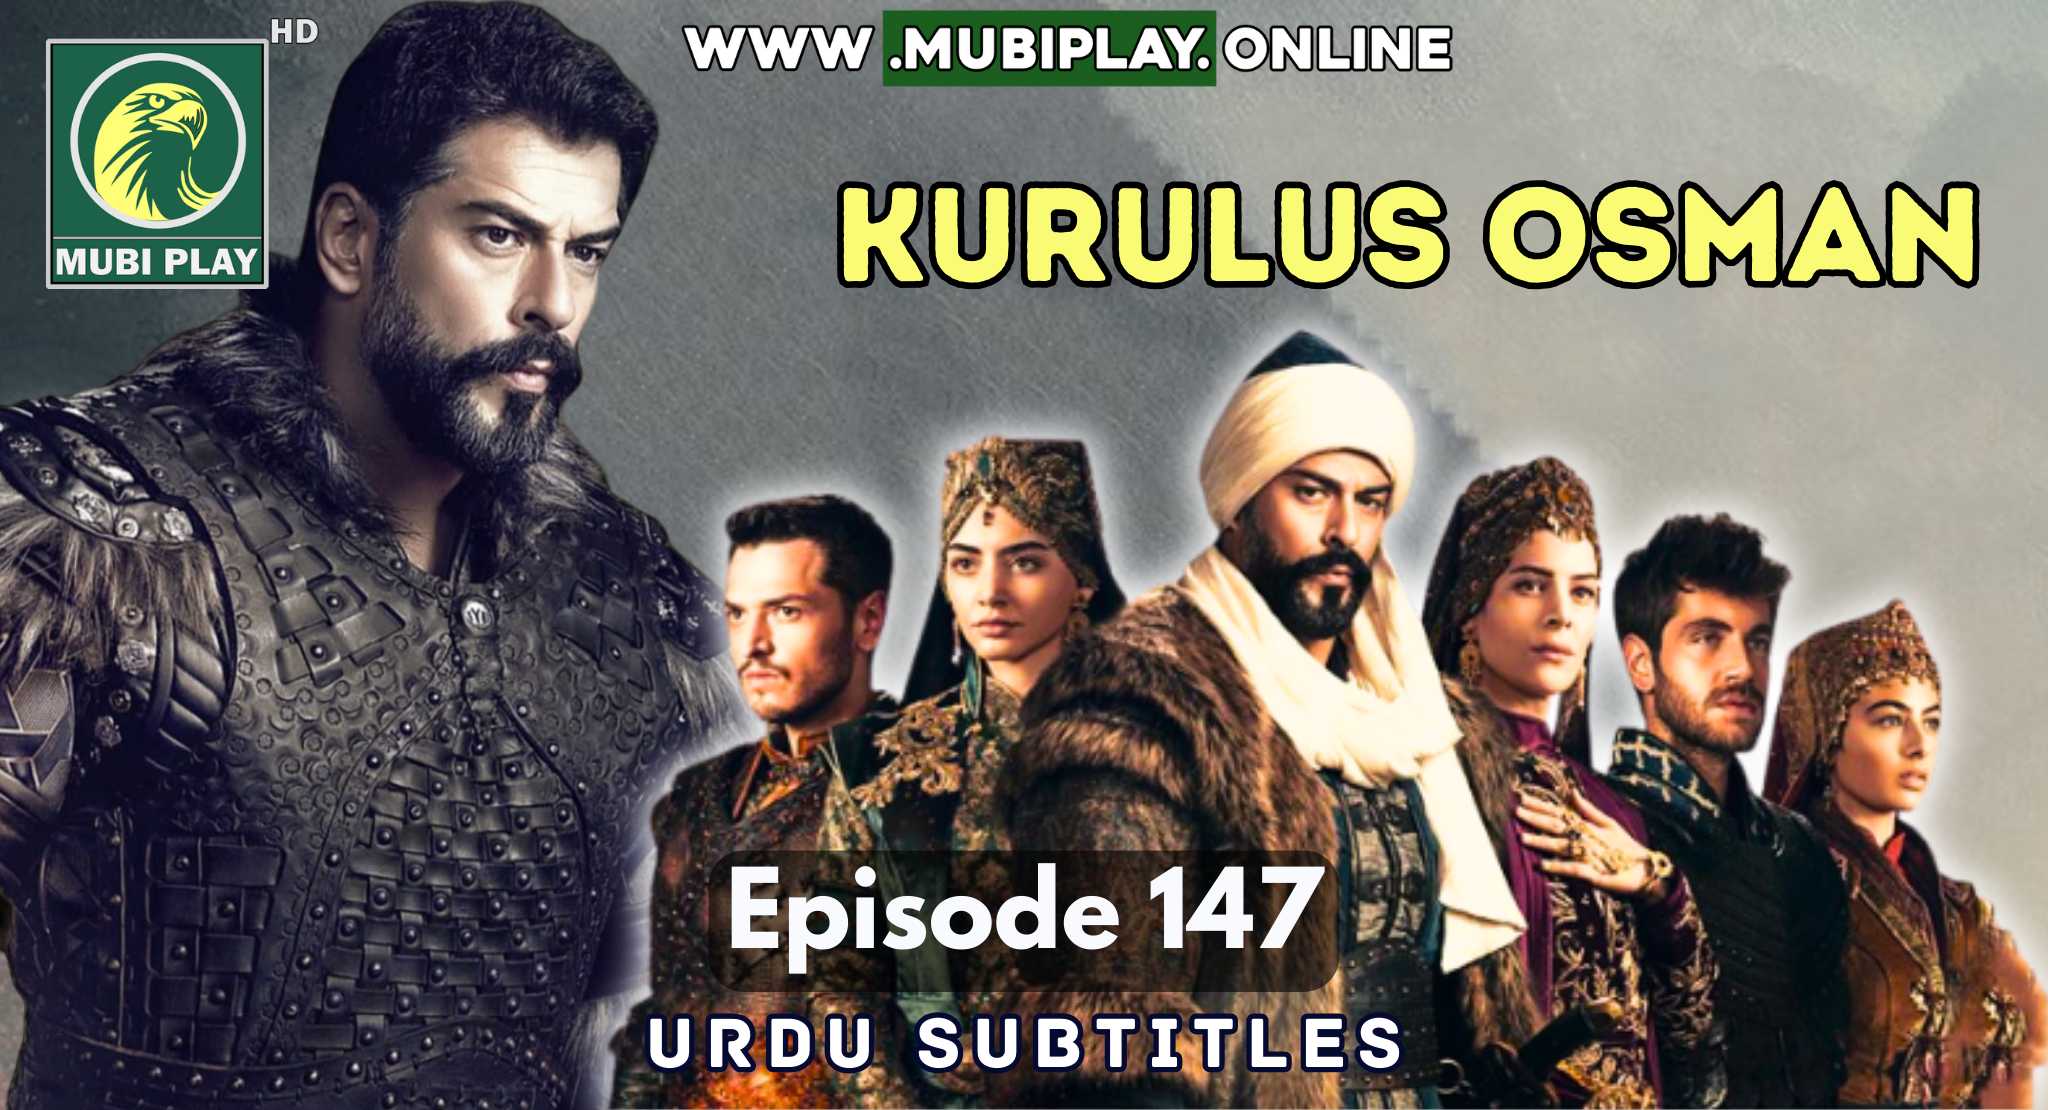 Kurulus Osman Episode 147 with Urdu Subtitles by Mubi Play